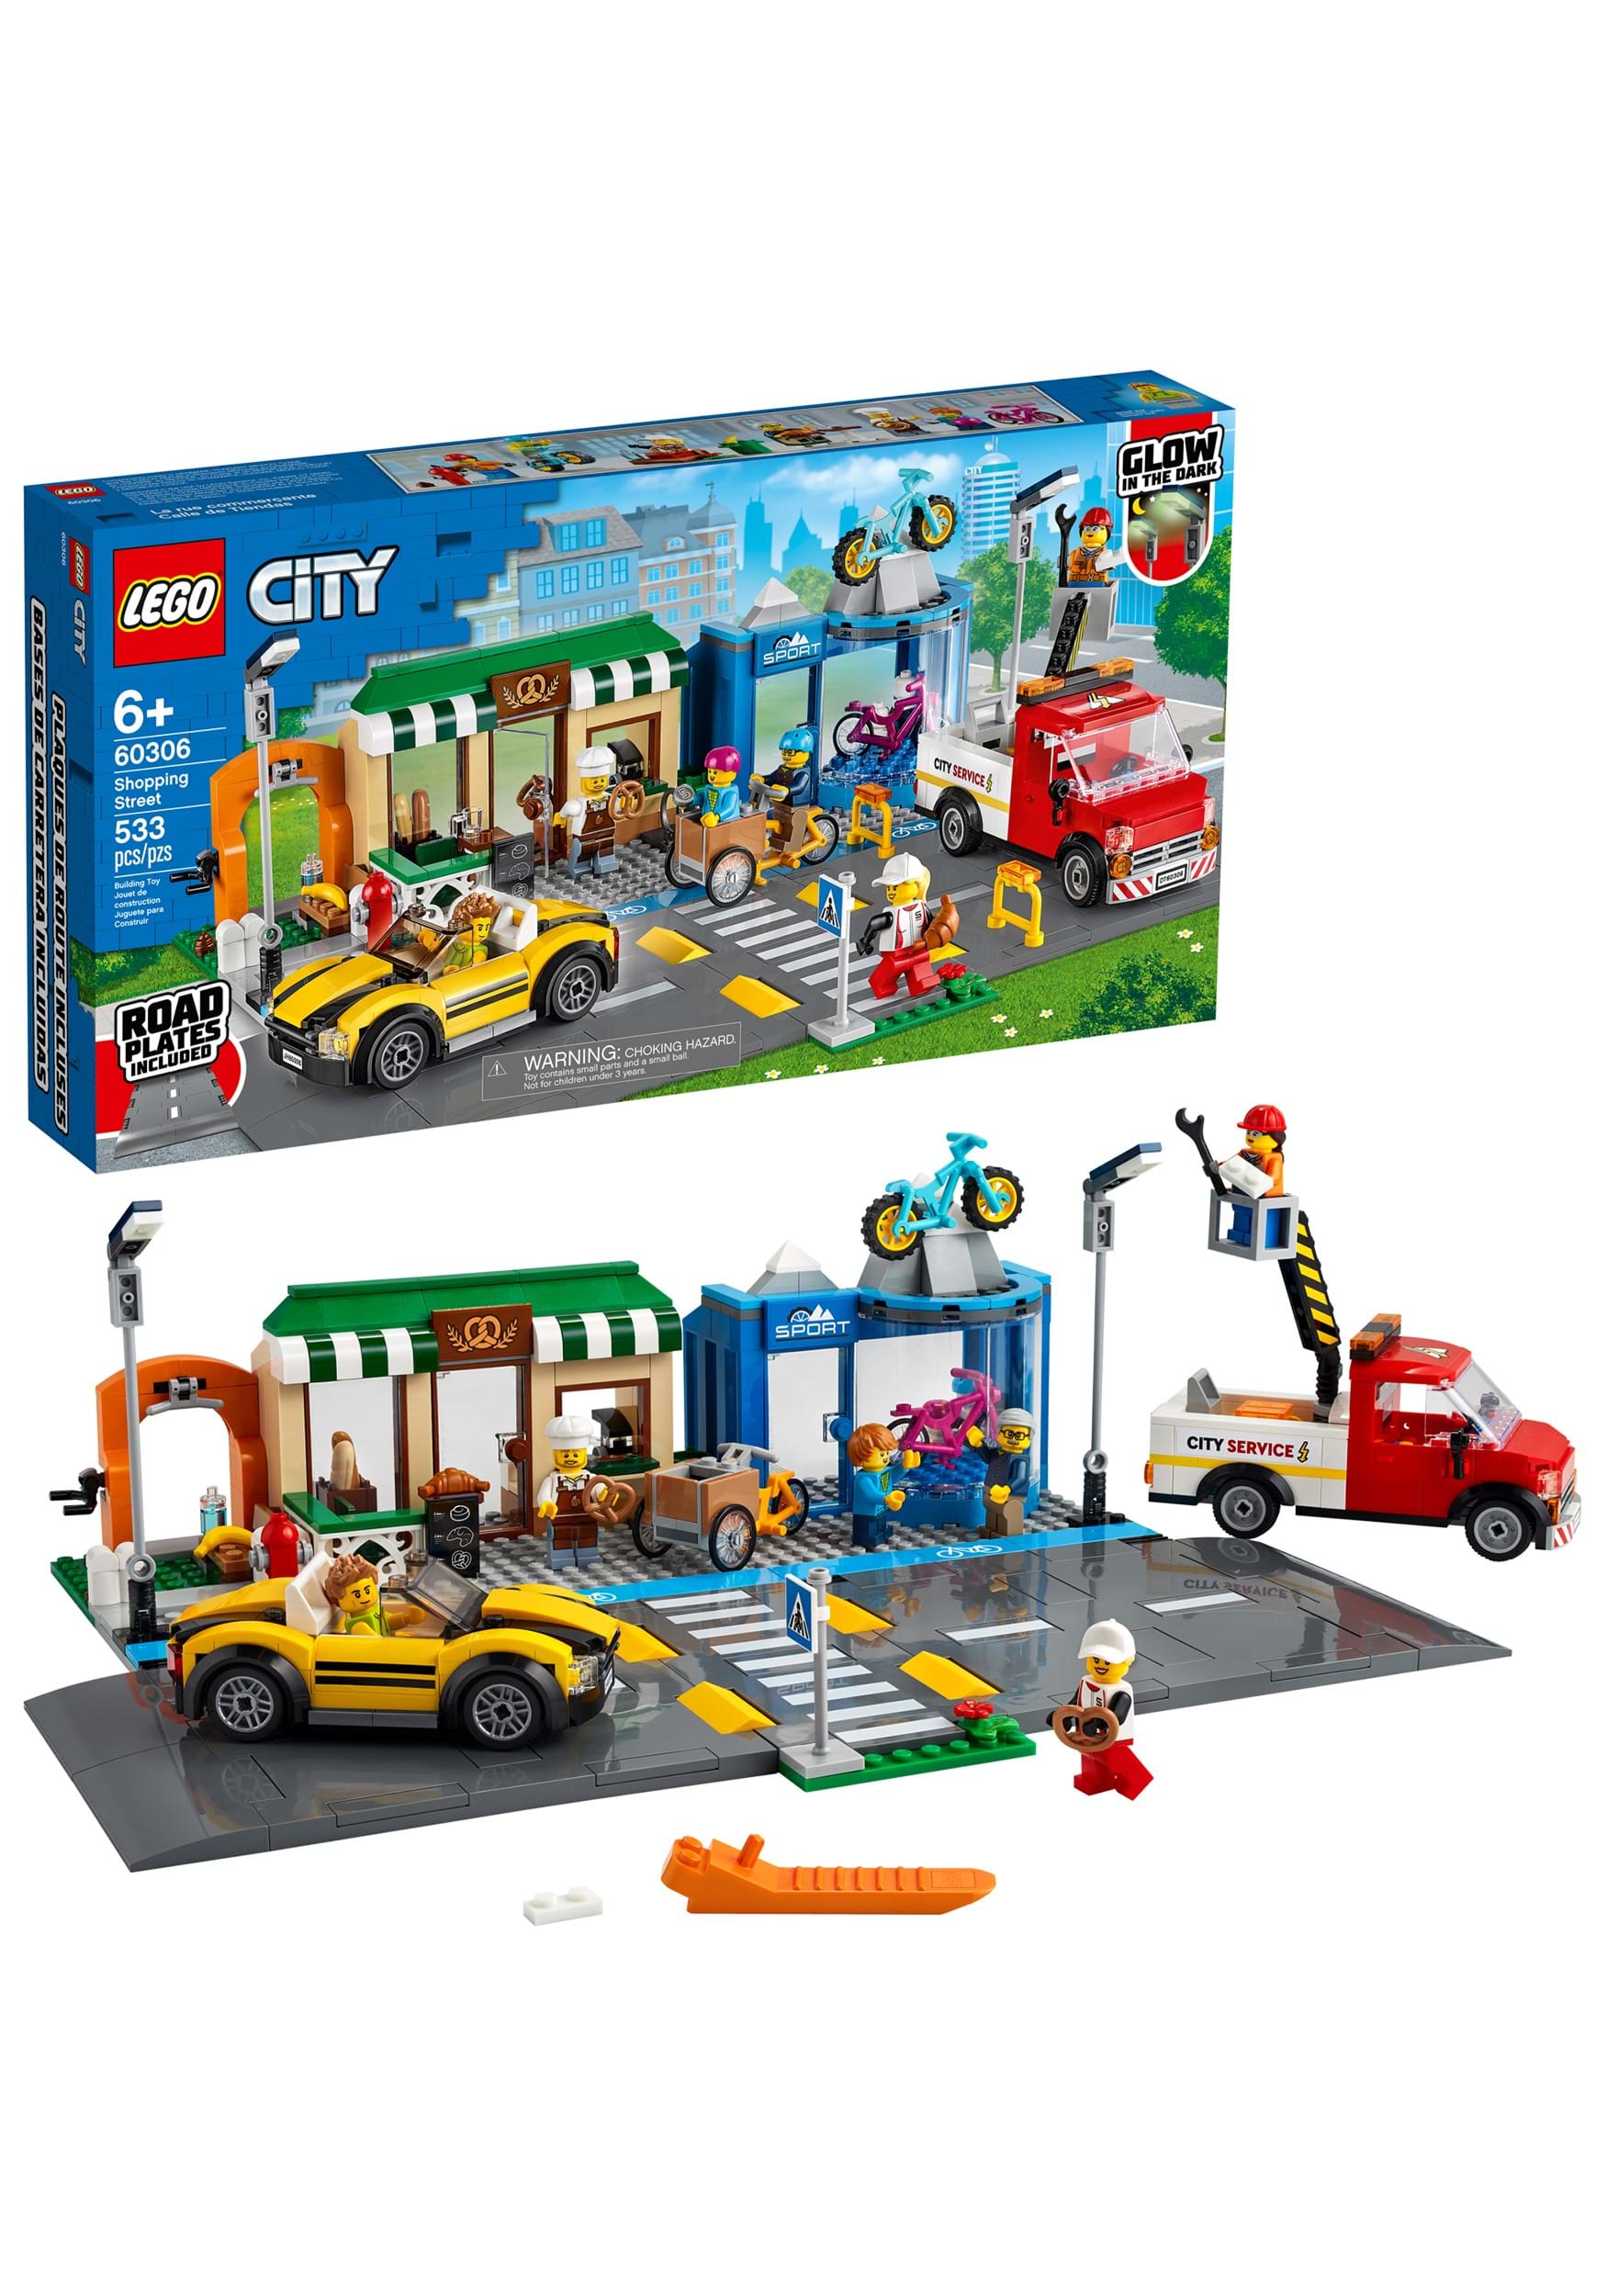 Shopping Street Building LEGO City Set